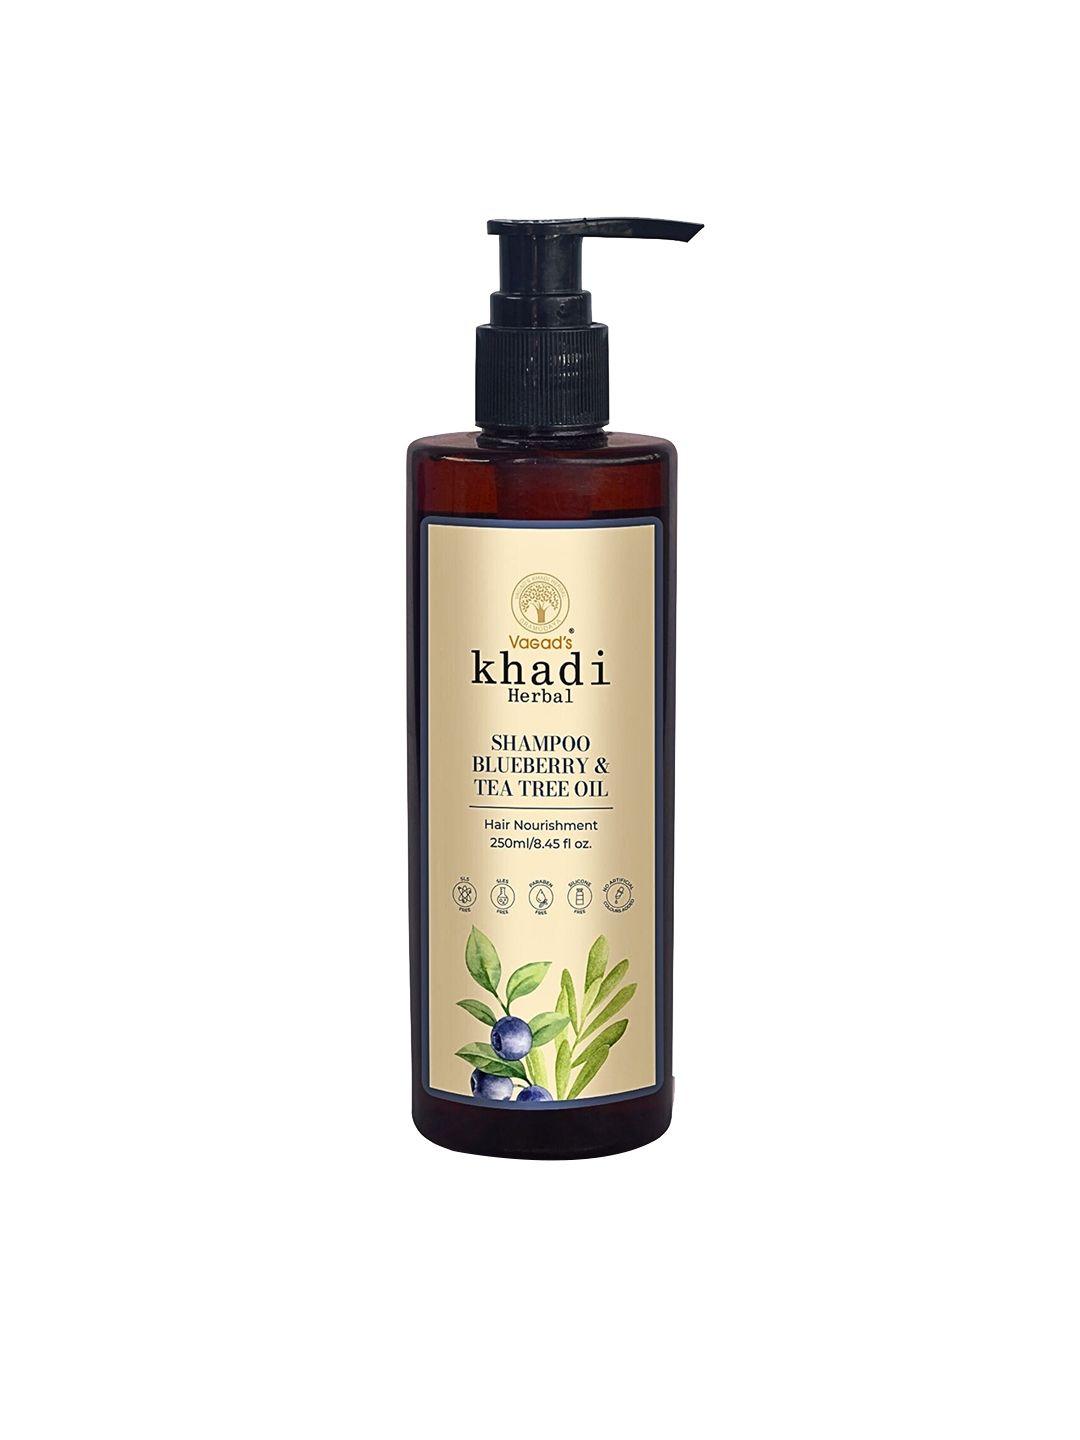 vagads khadi herbal blueberry with tea tree oil shampoo - 250ml